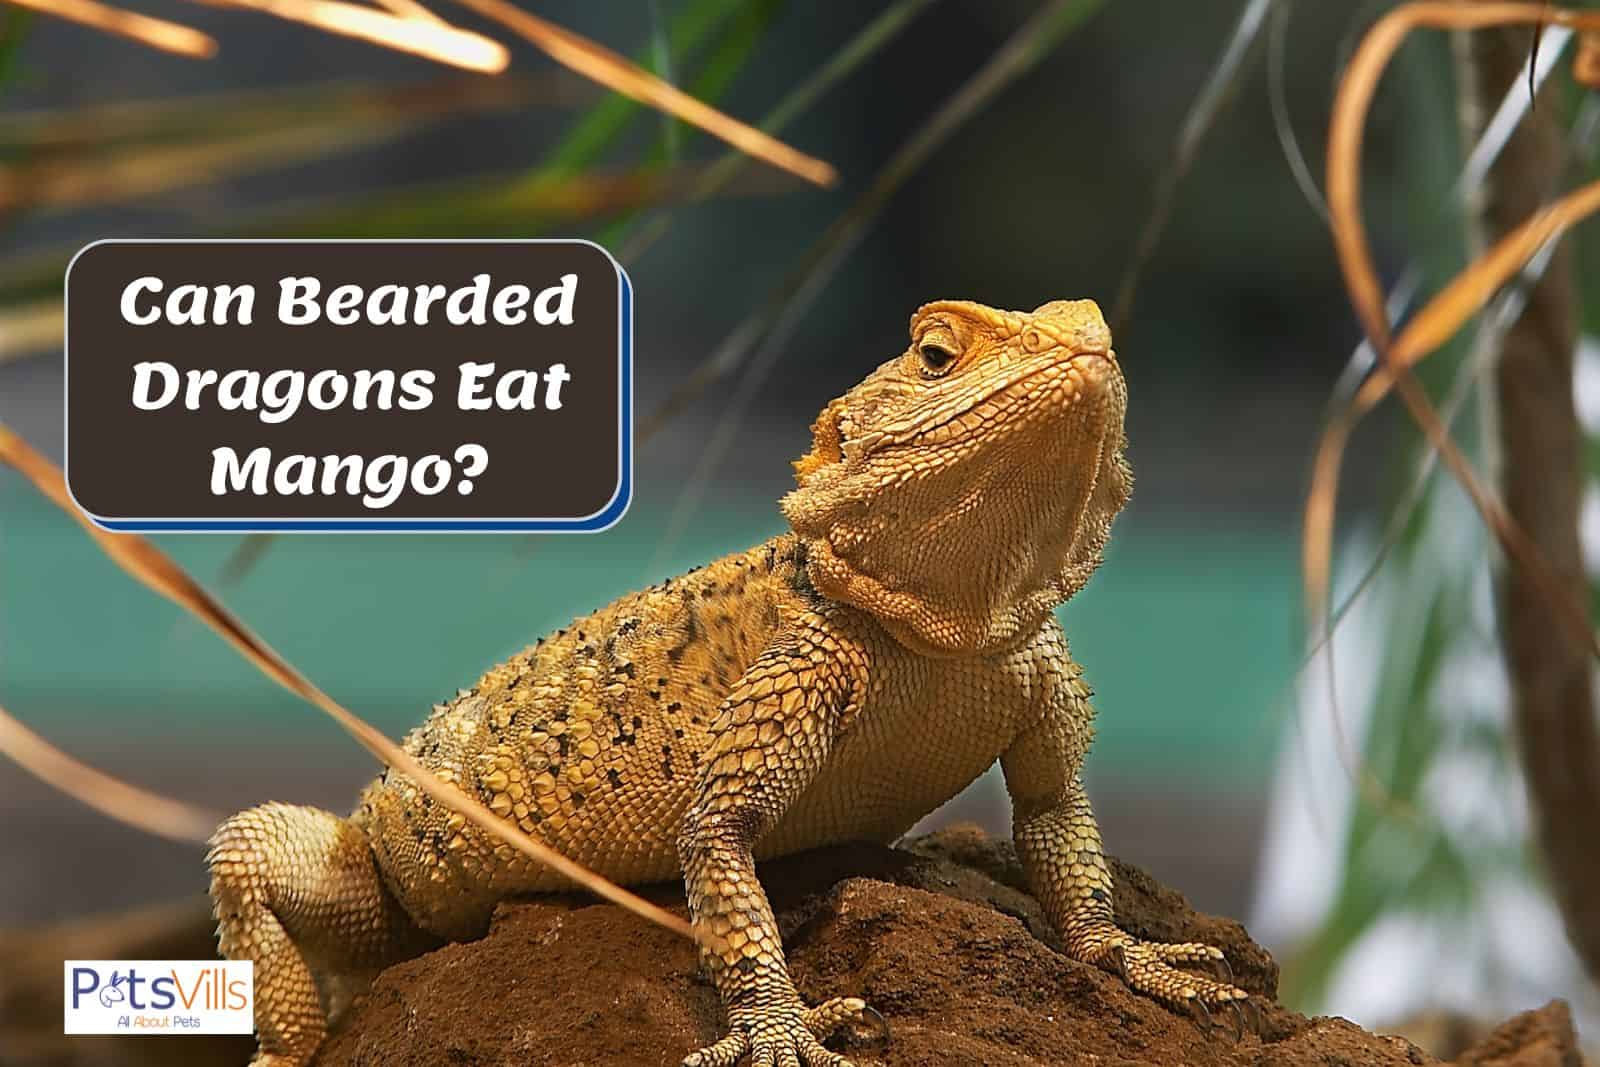 Can Bearded Dragons Eat Mango Skin?